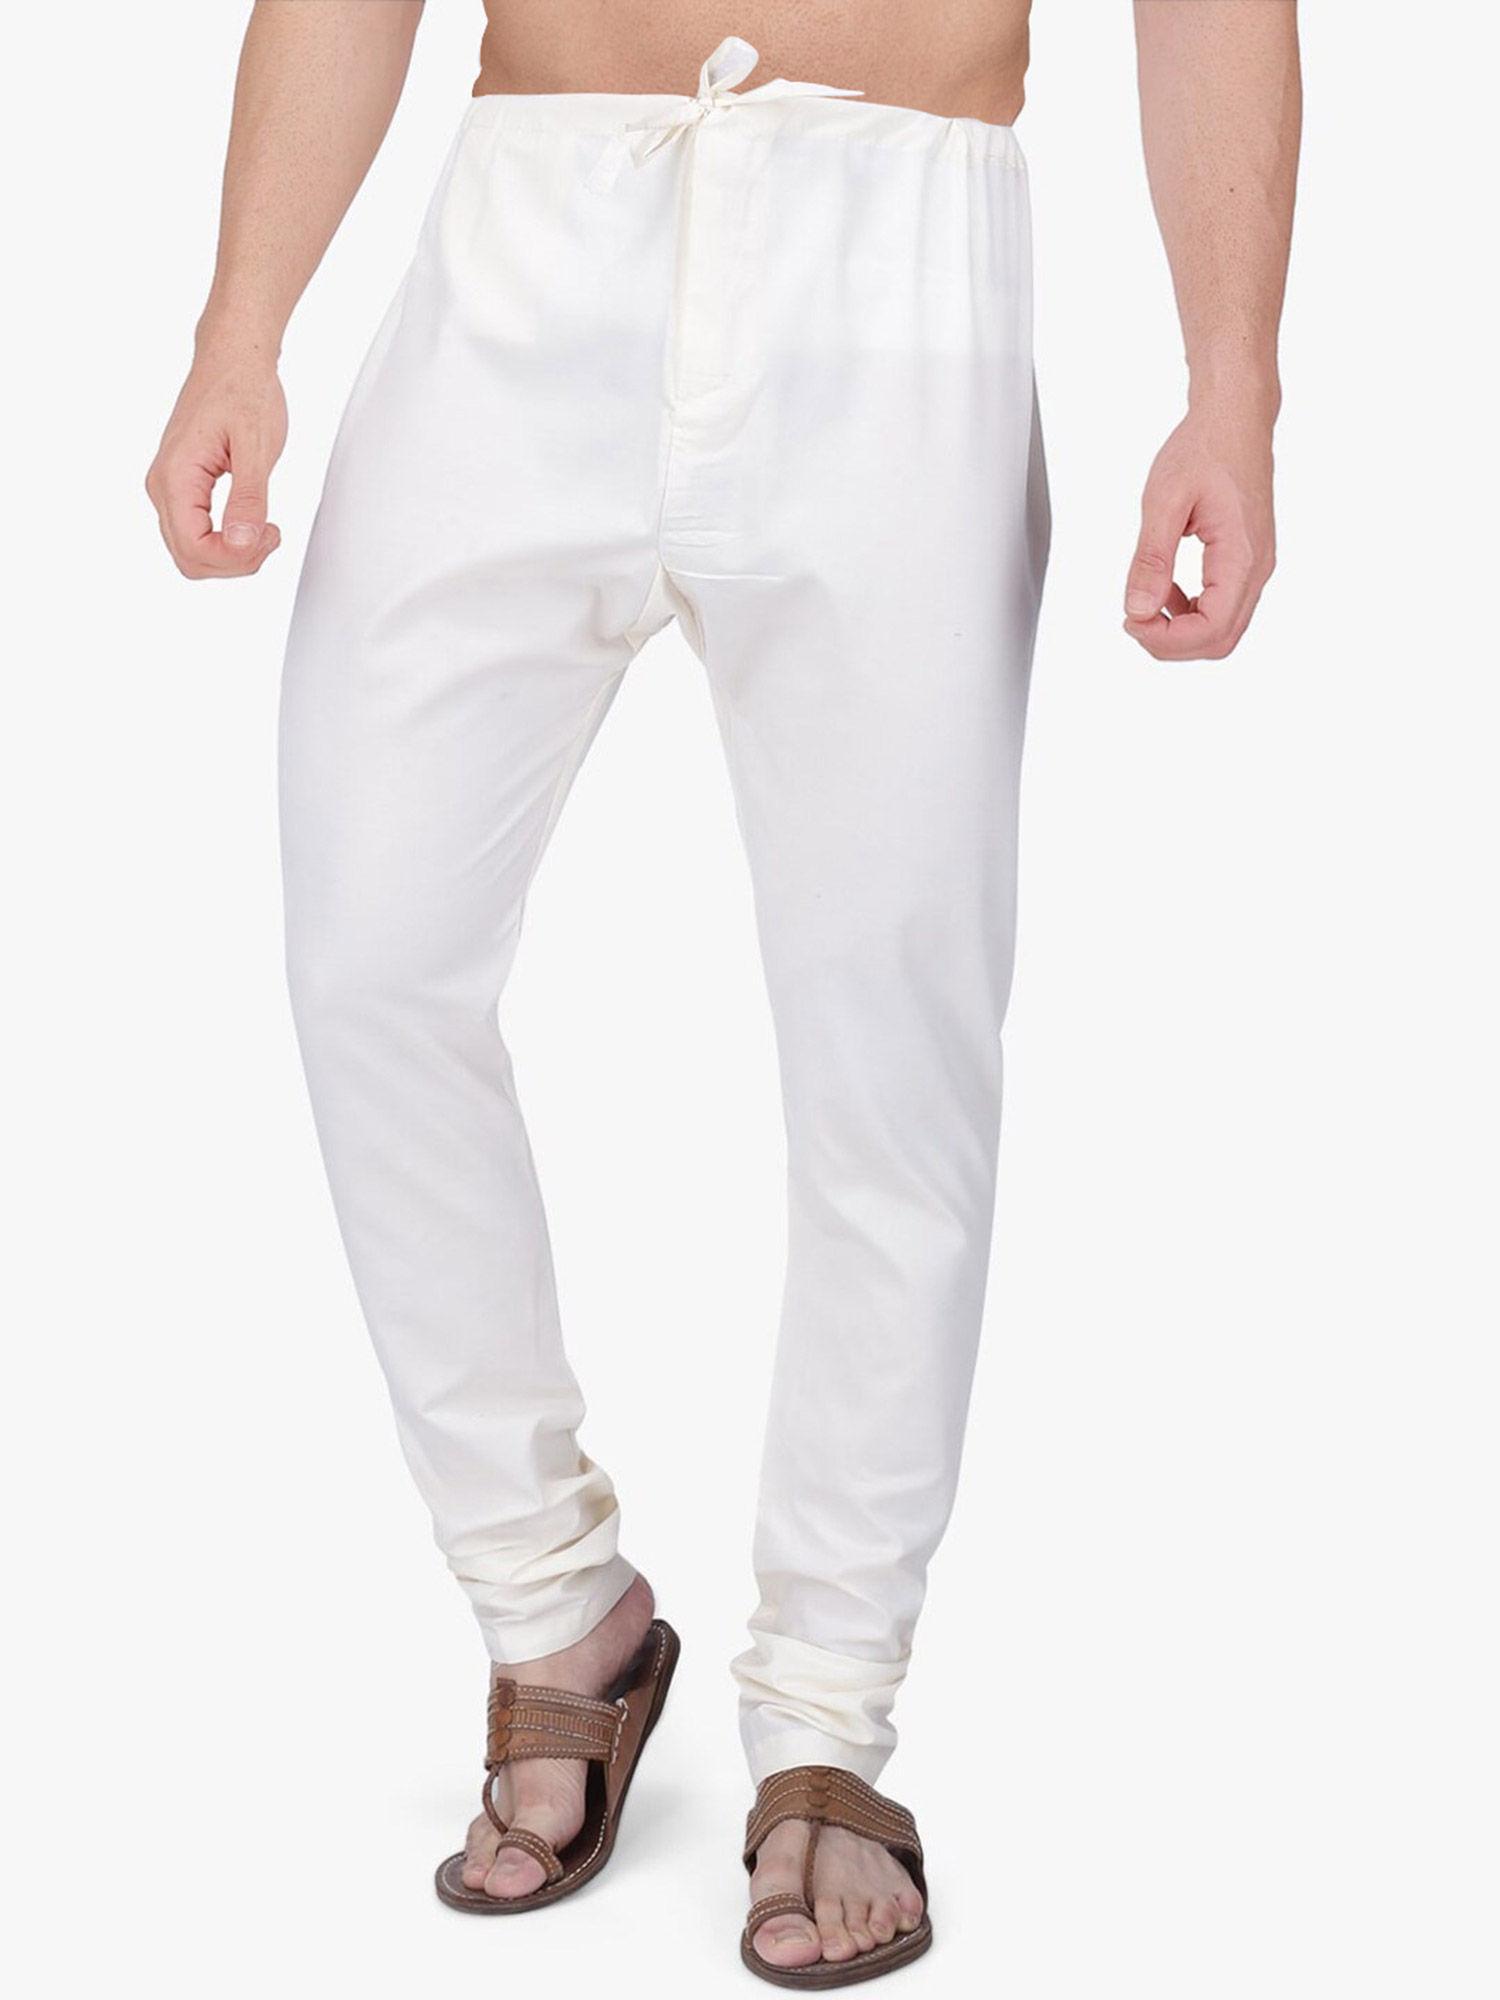 men's solid white colour cotton churidar